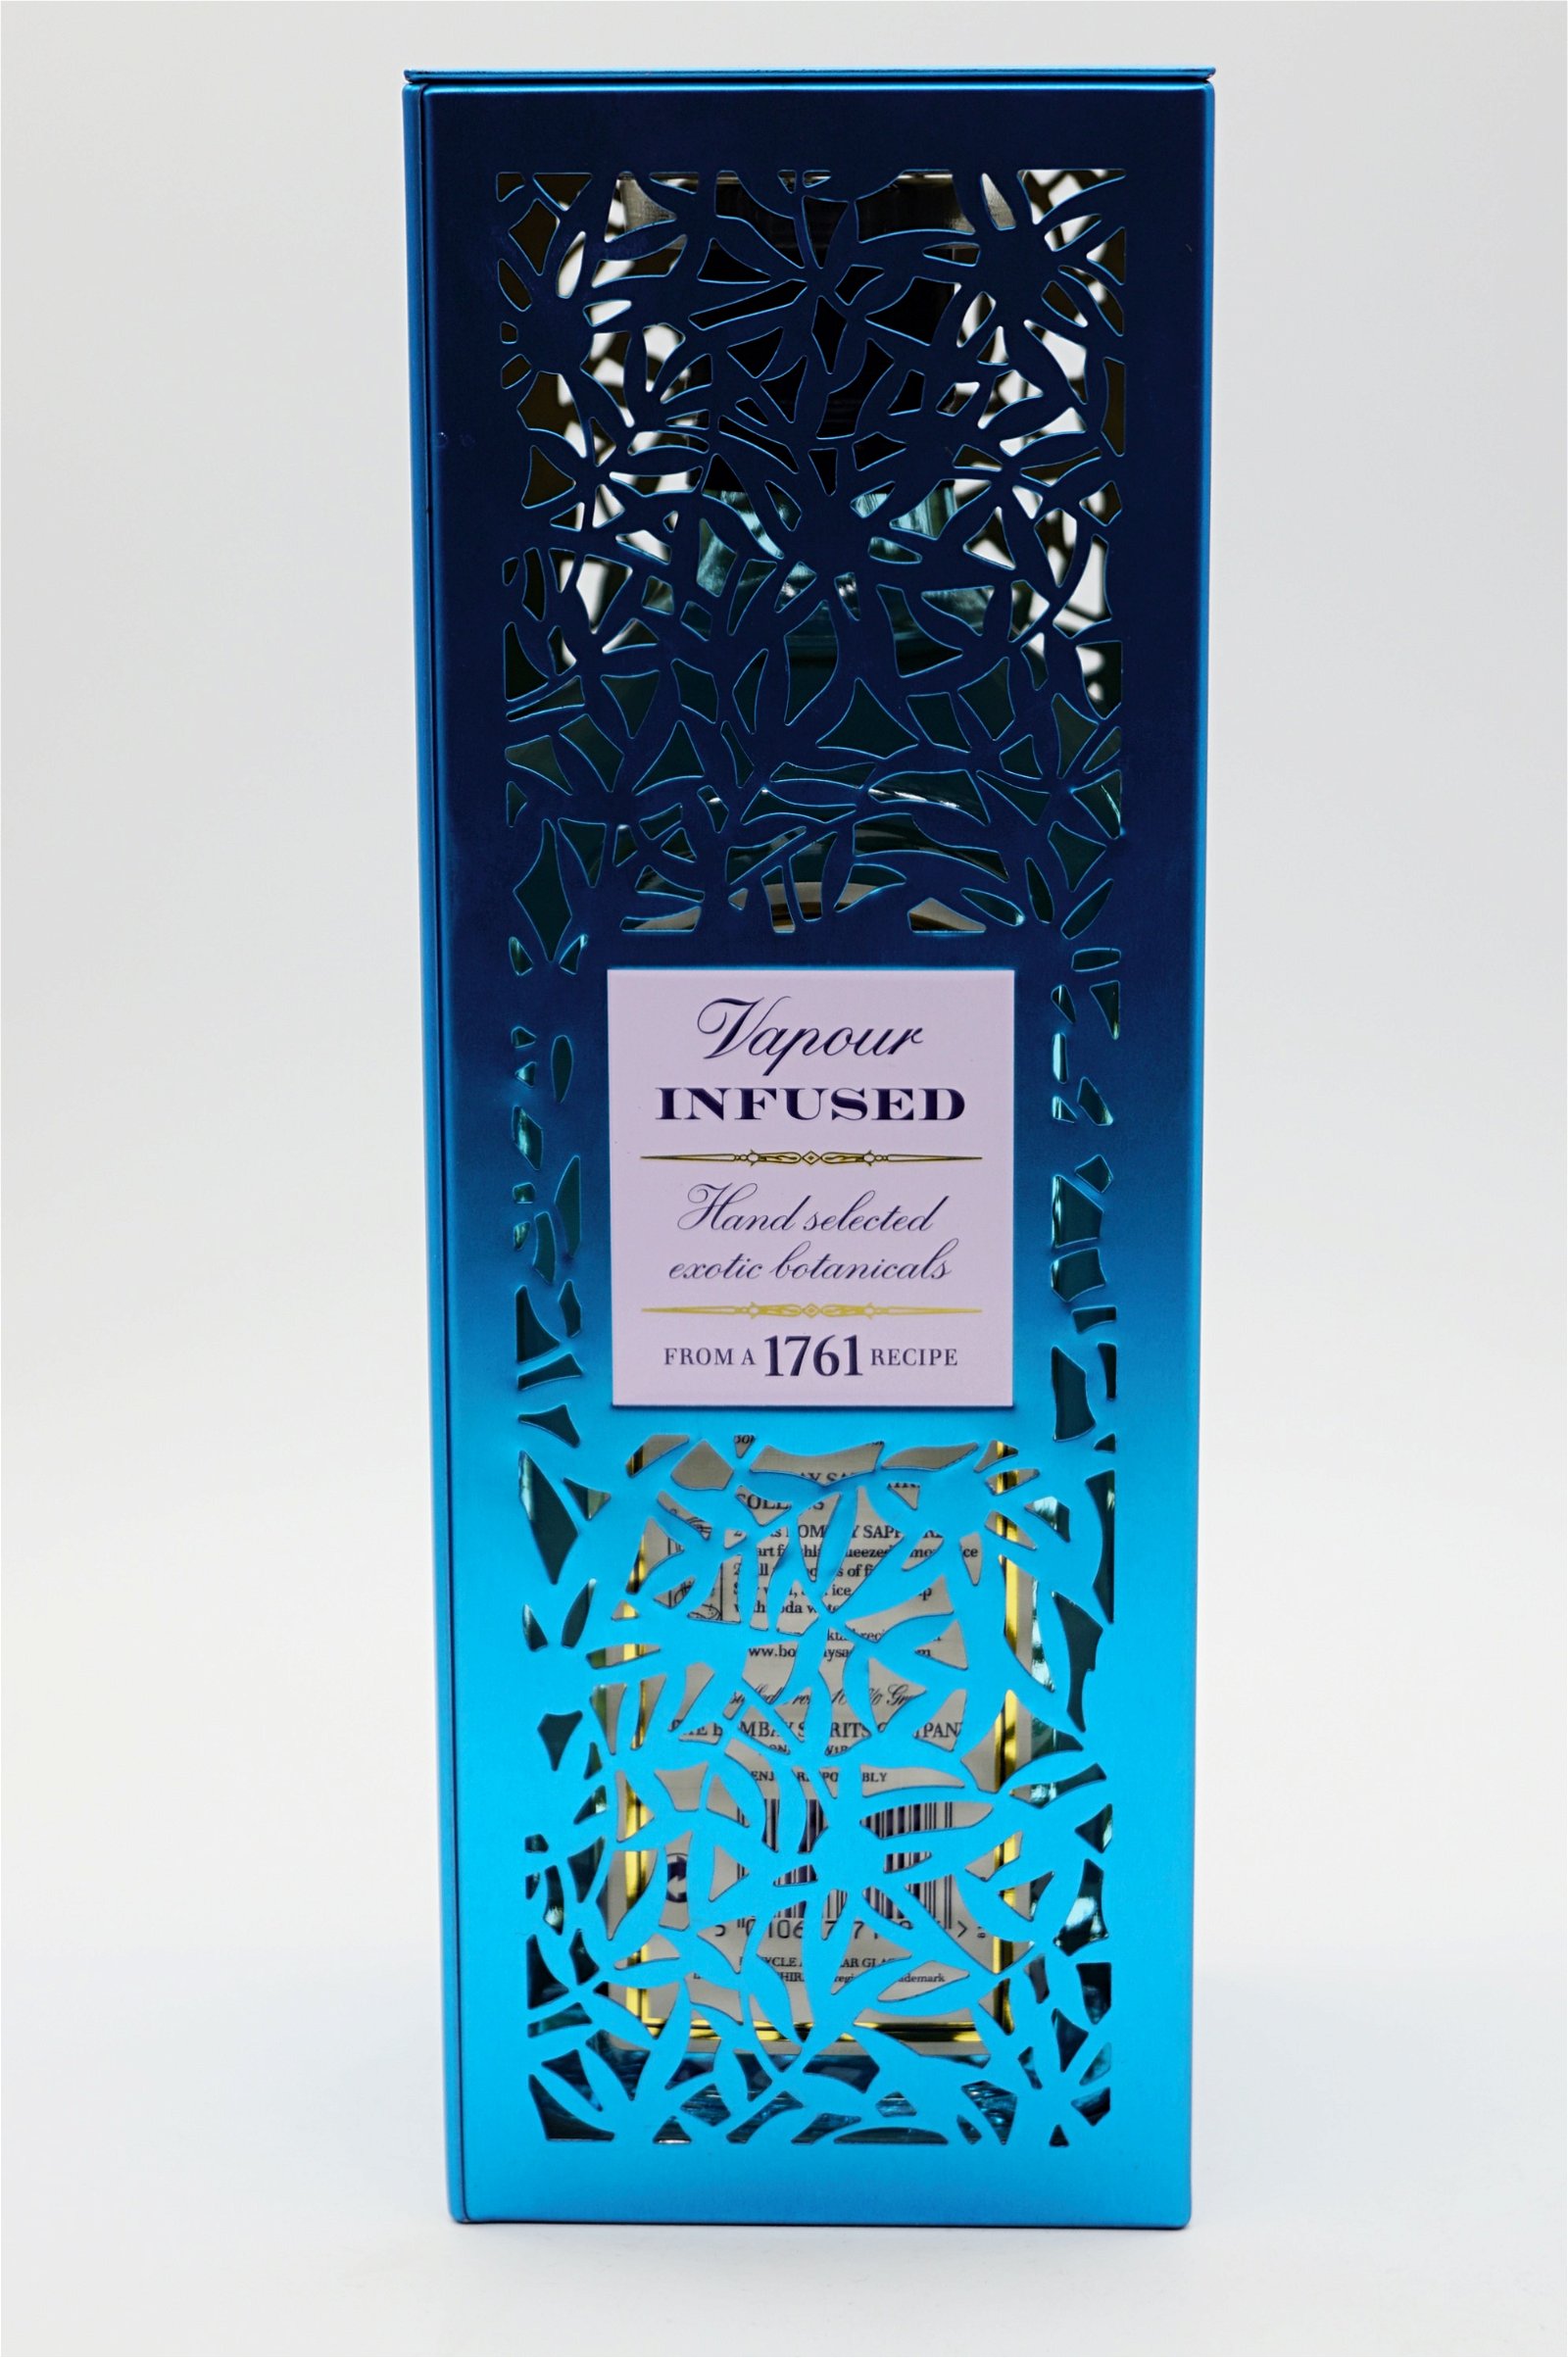 Bombay Sapphire London Dry Gin Geschenkbox